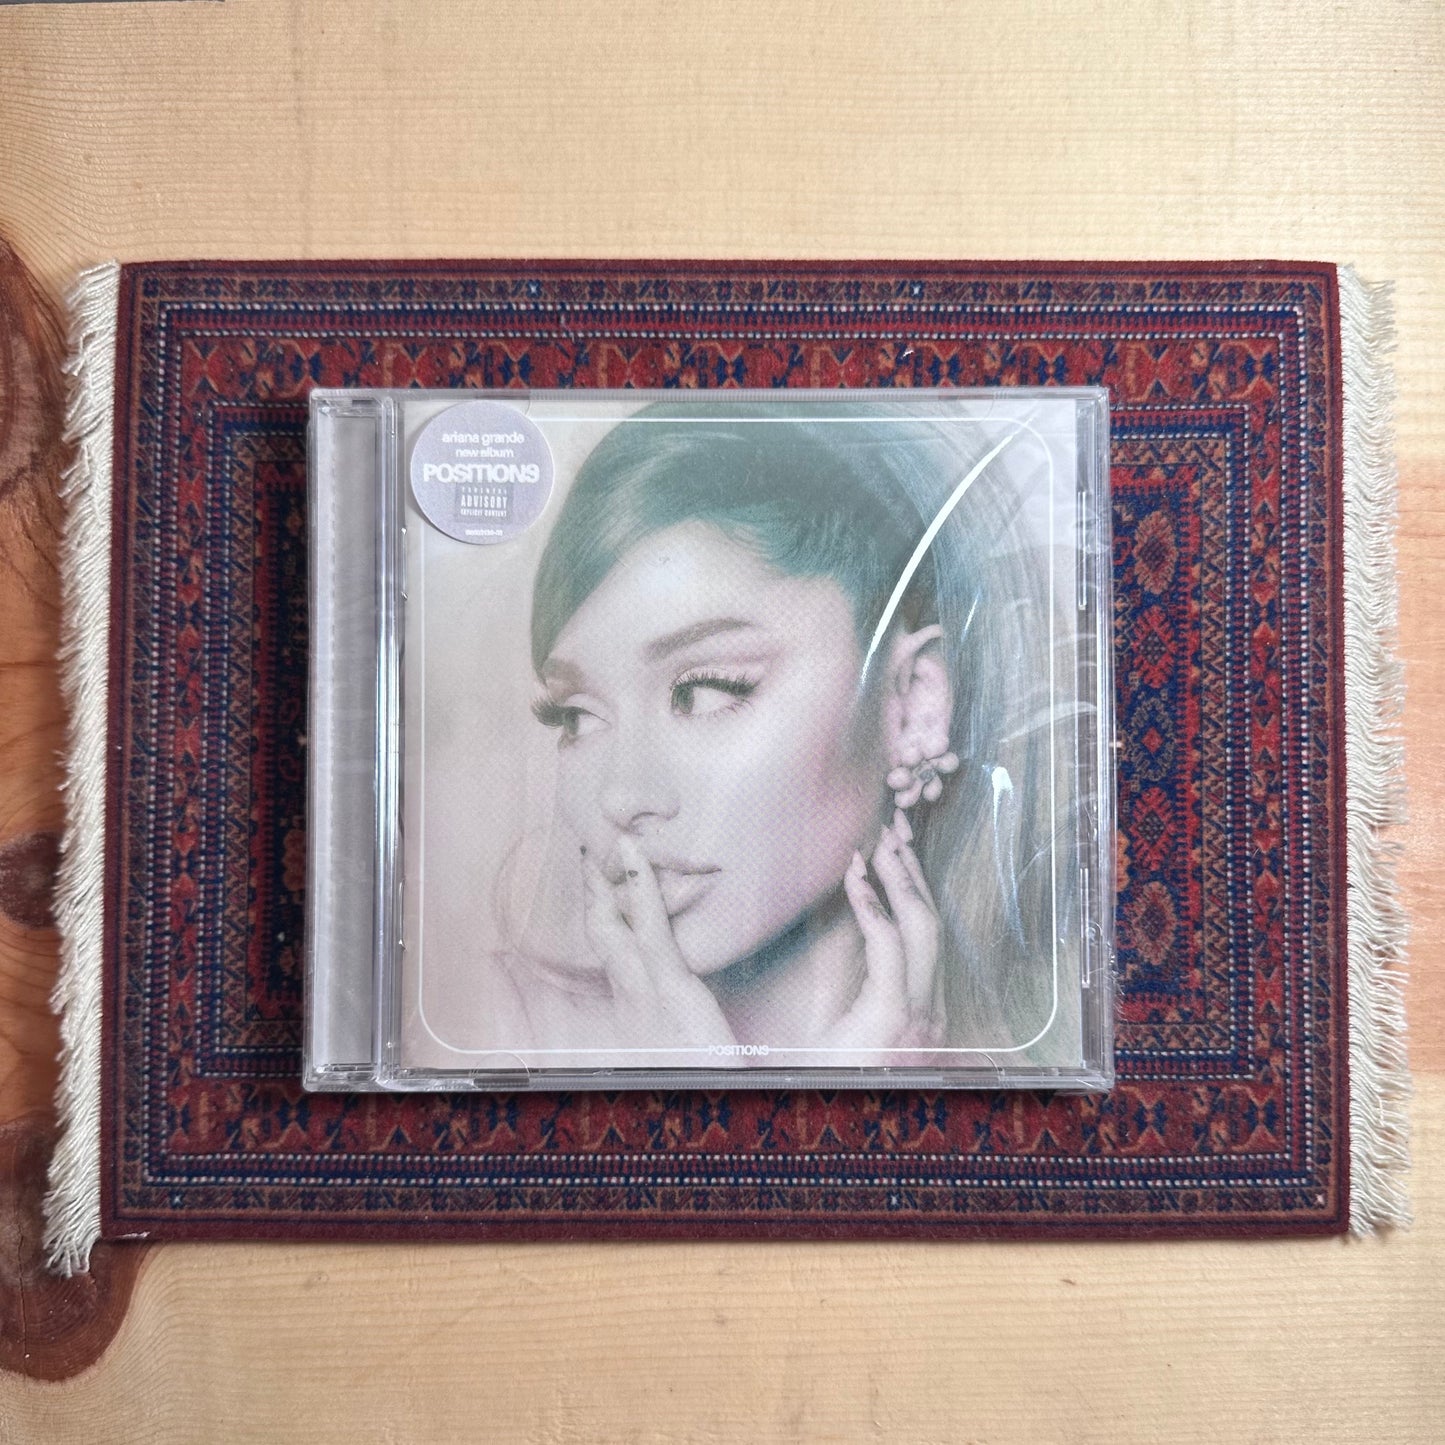 Ariana Grande - Positions (Explicit) [CD]